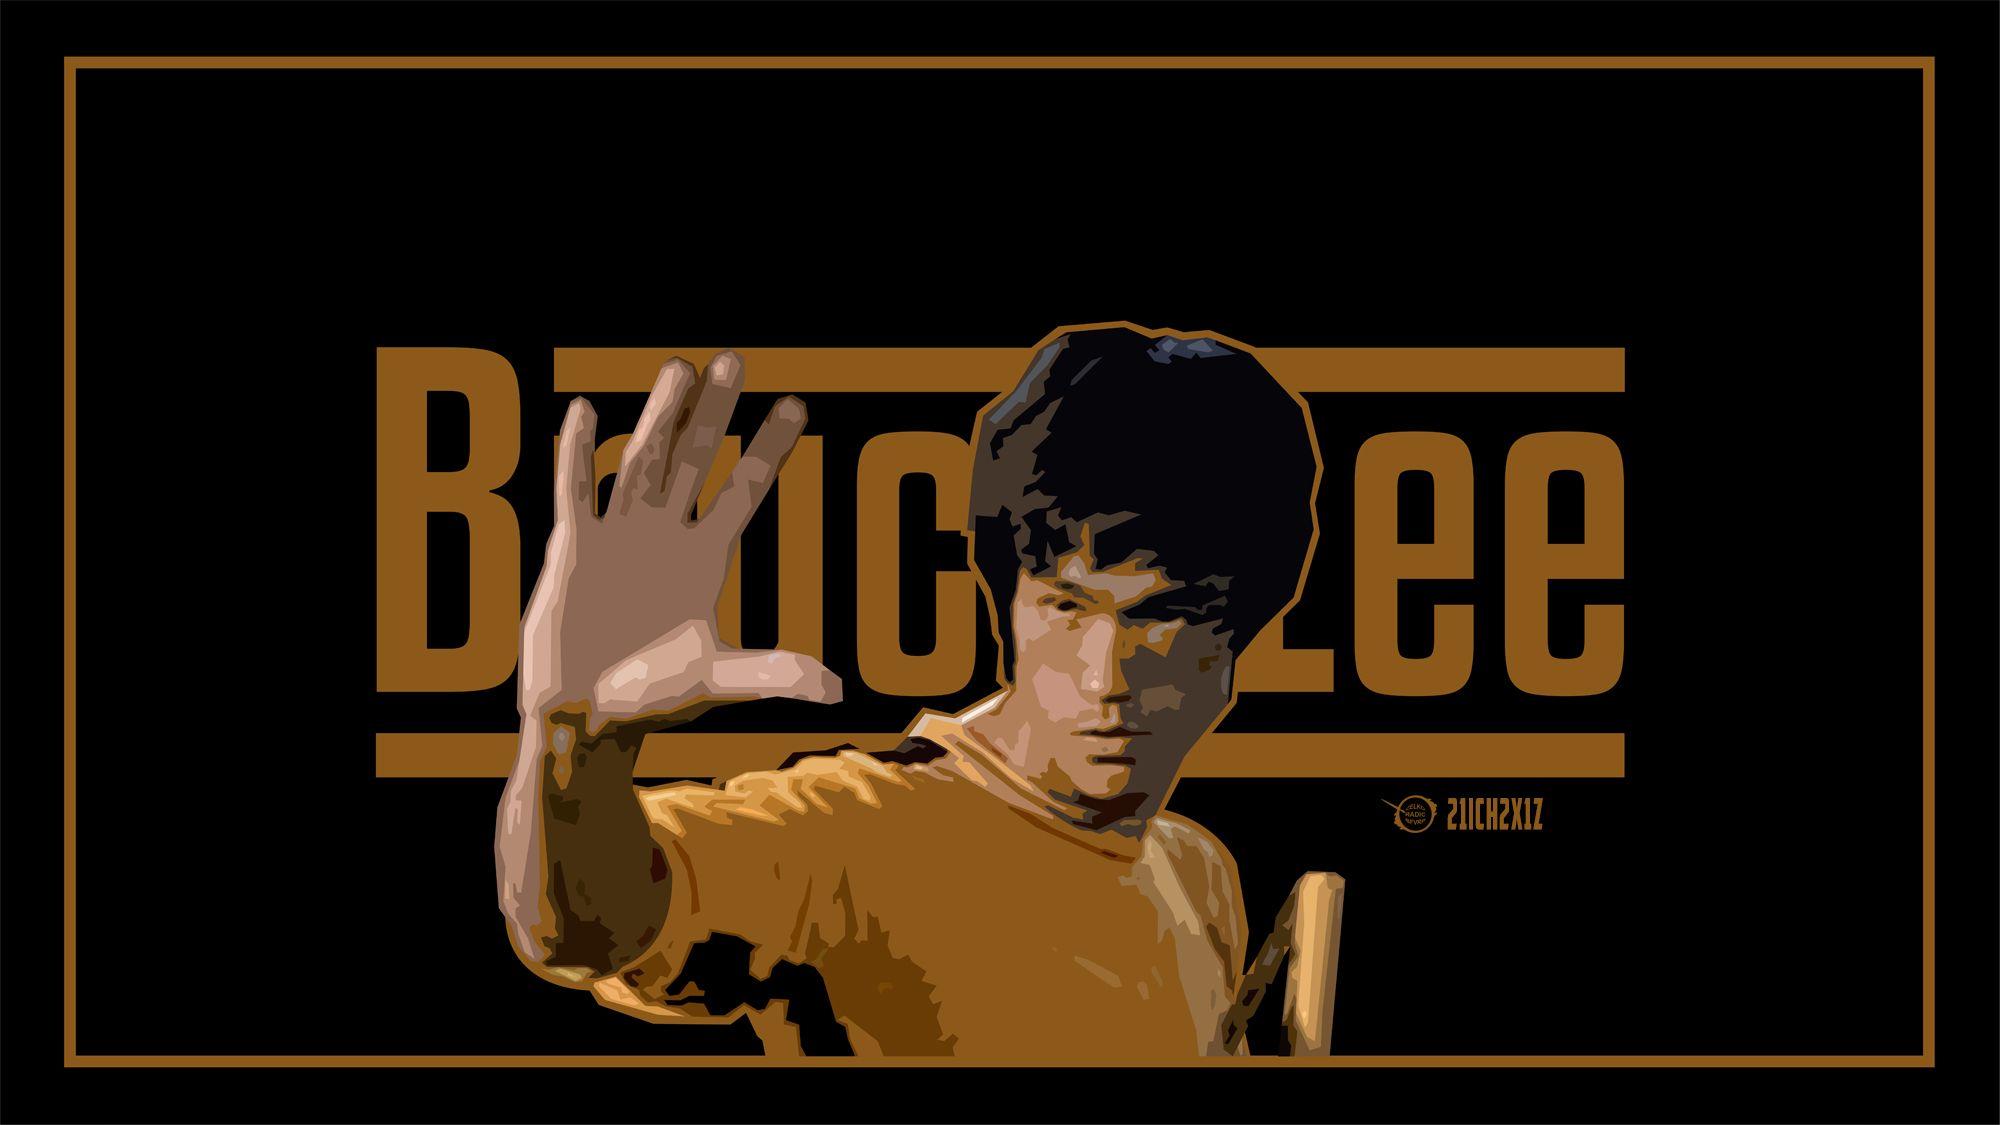 Bruce Lee with Nunchucks Full HD Wallpaper